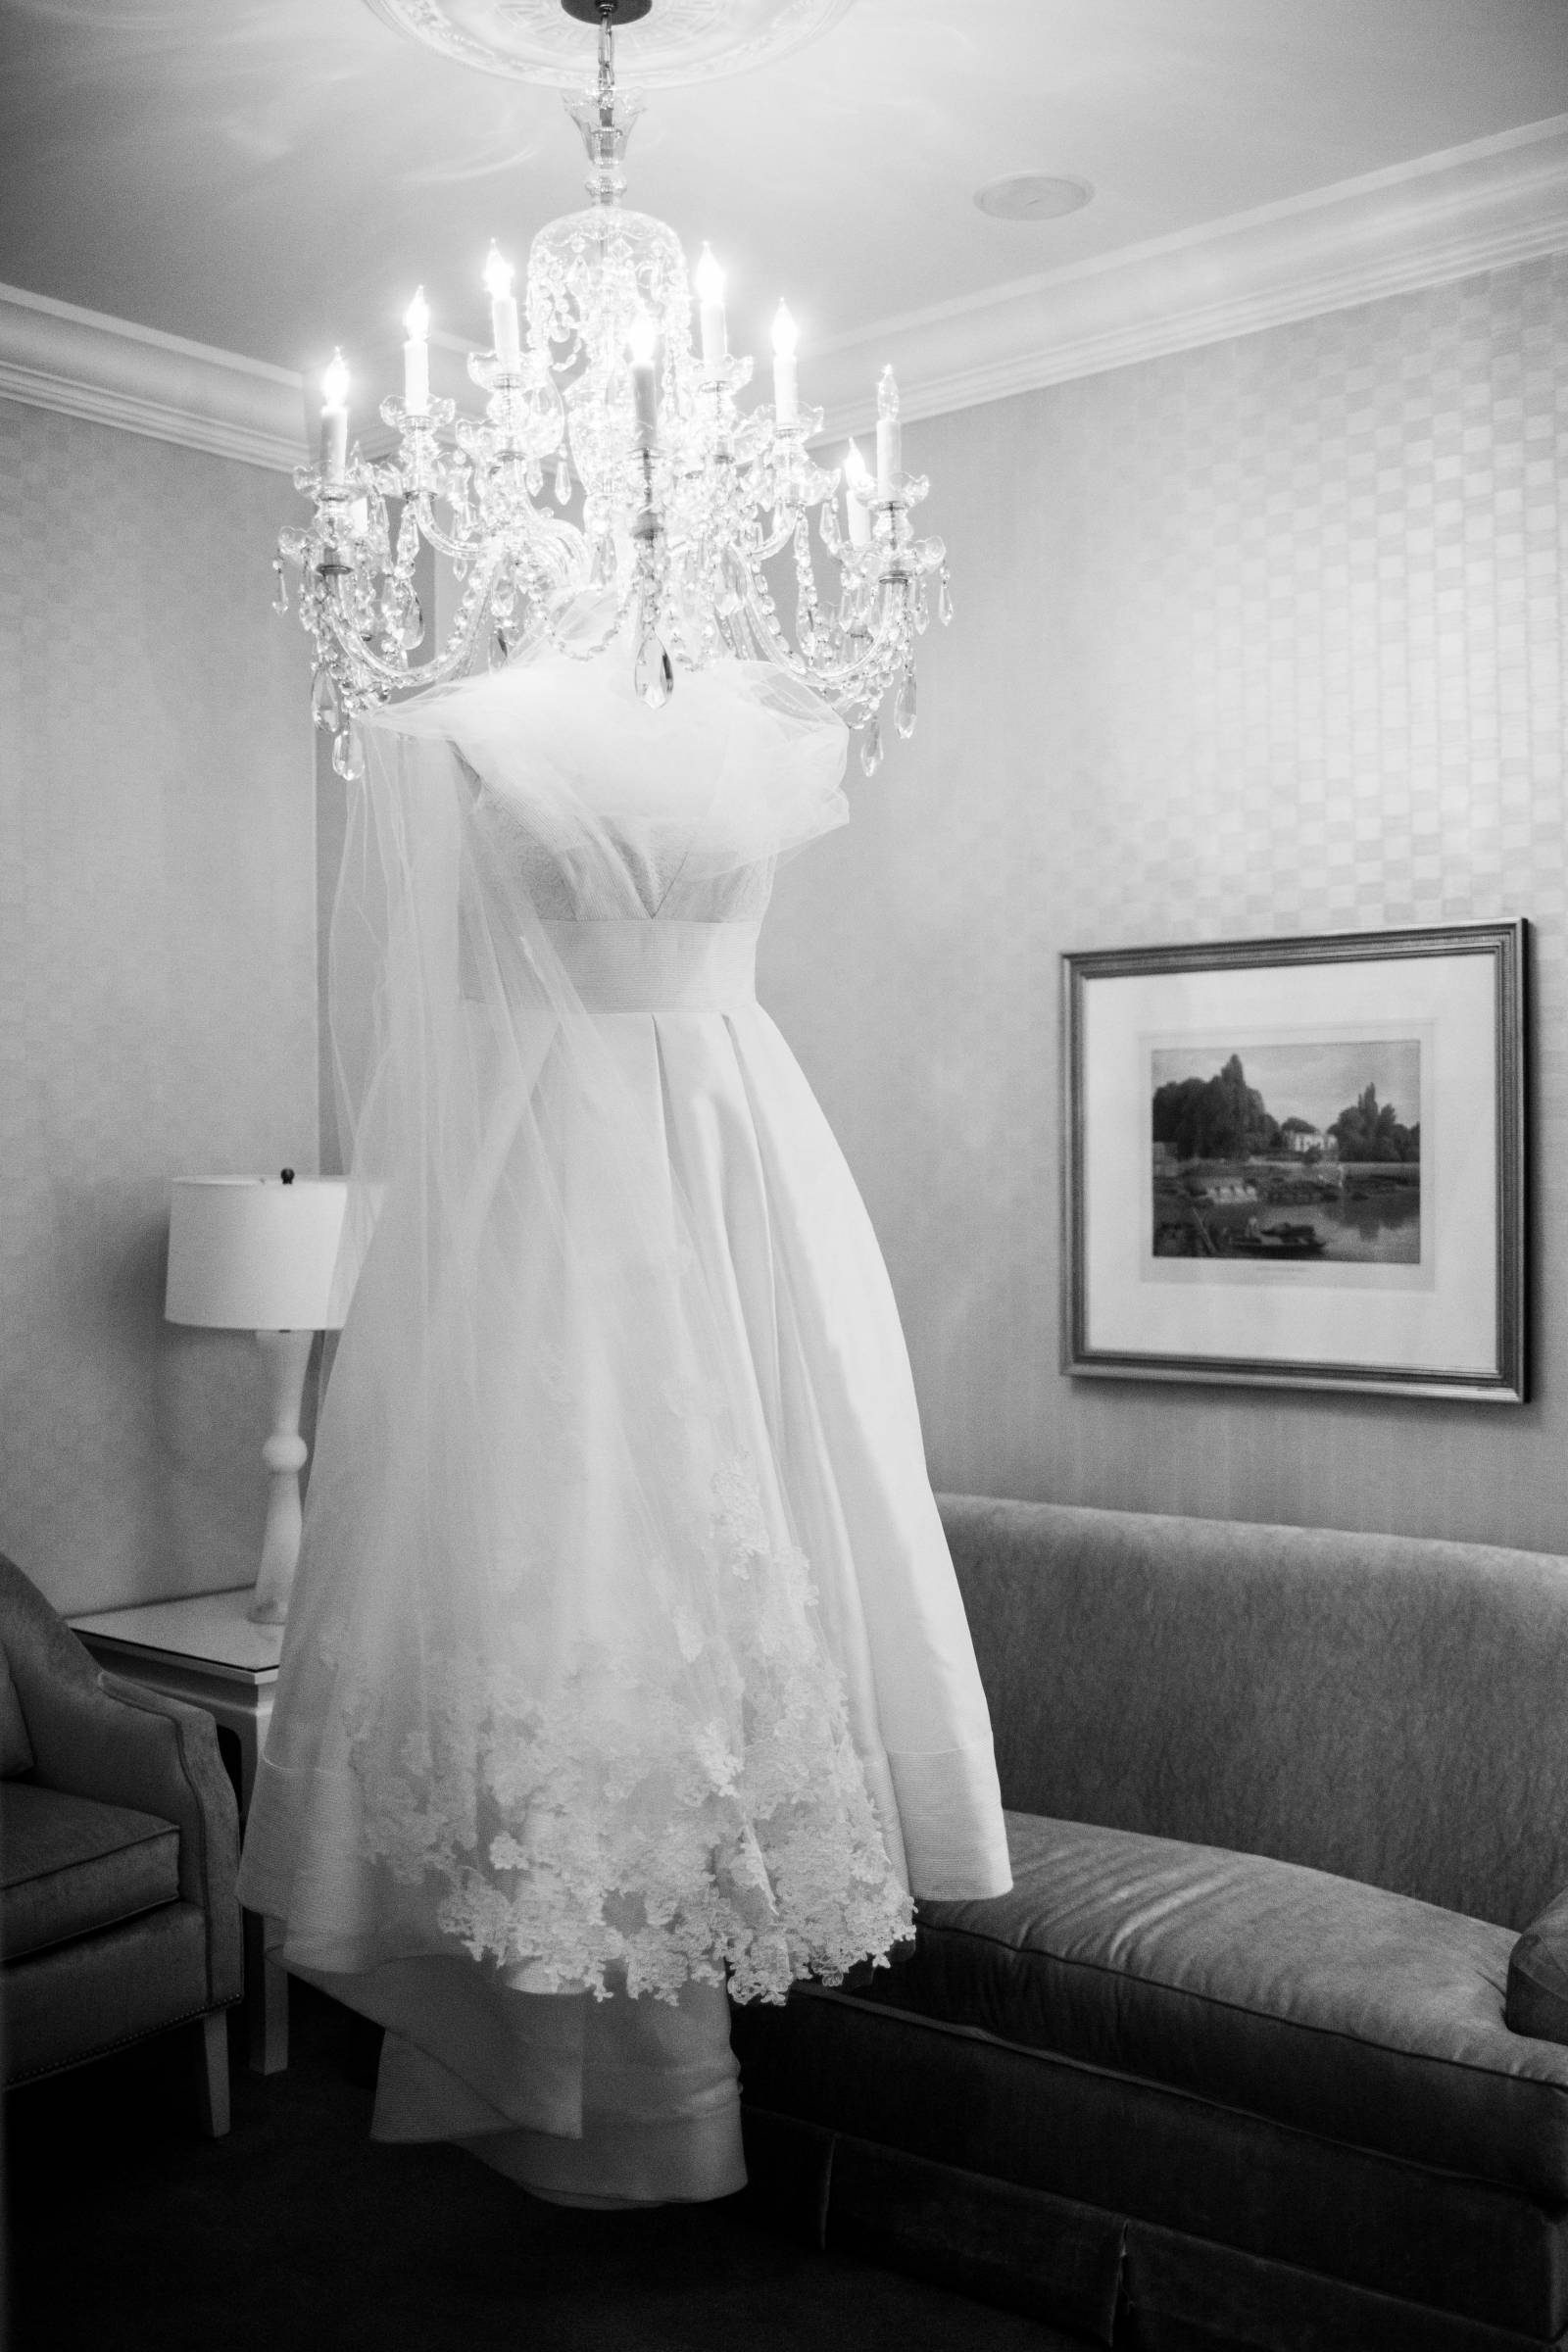 Wedding dress hanging on chandelier